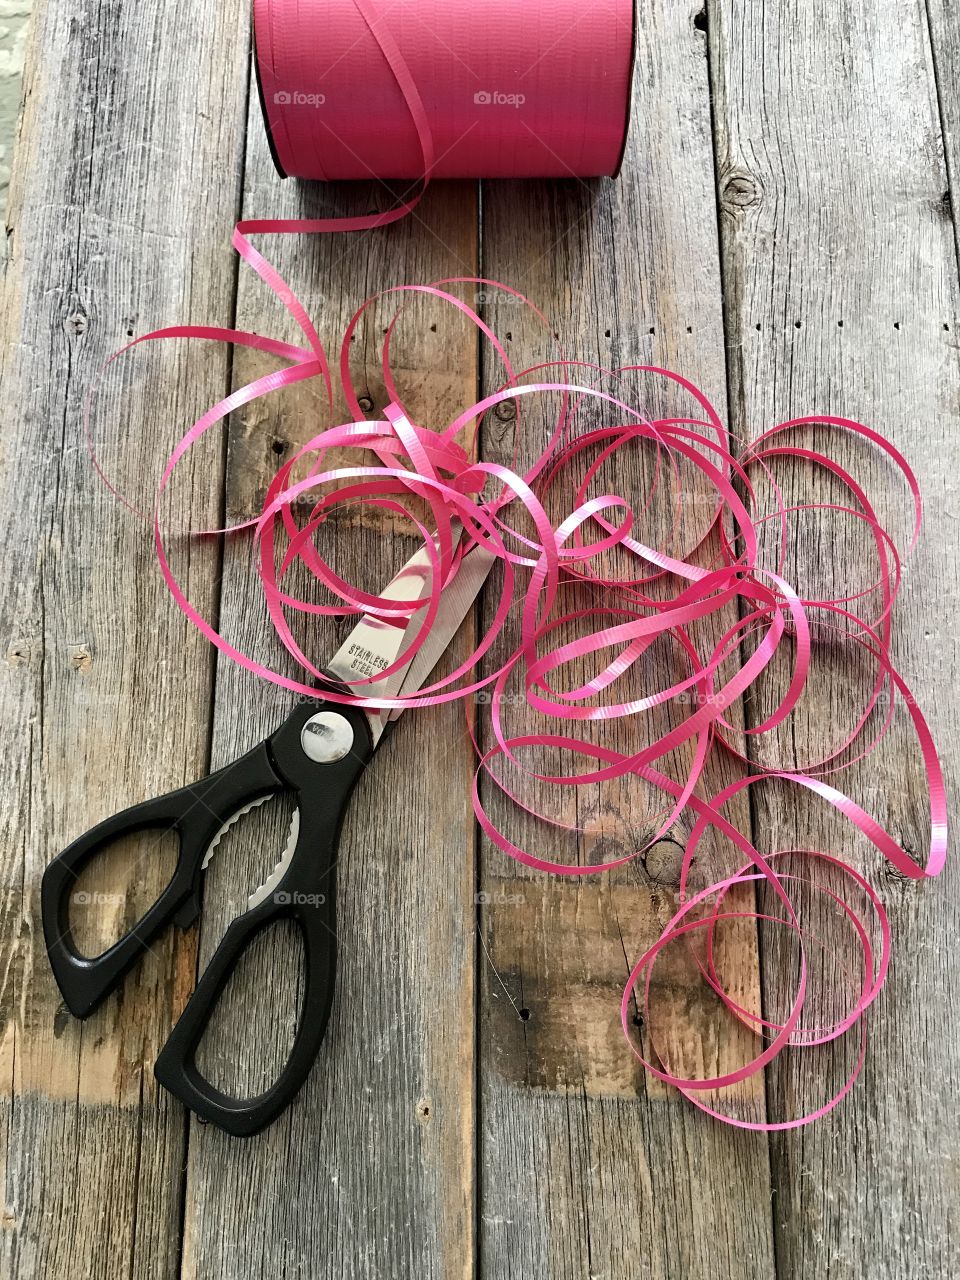 Scissors pink ribbon on table